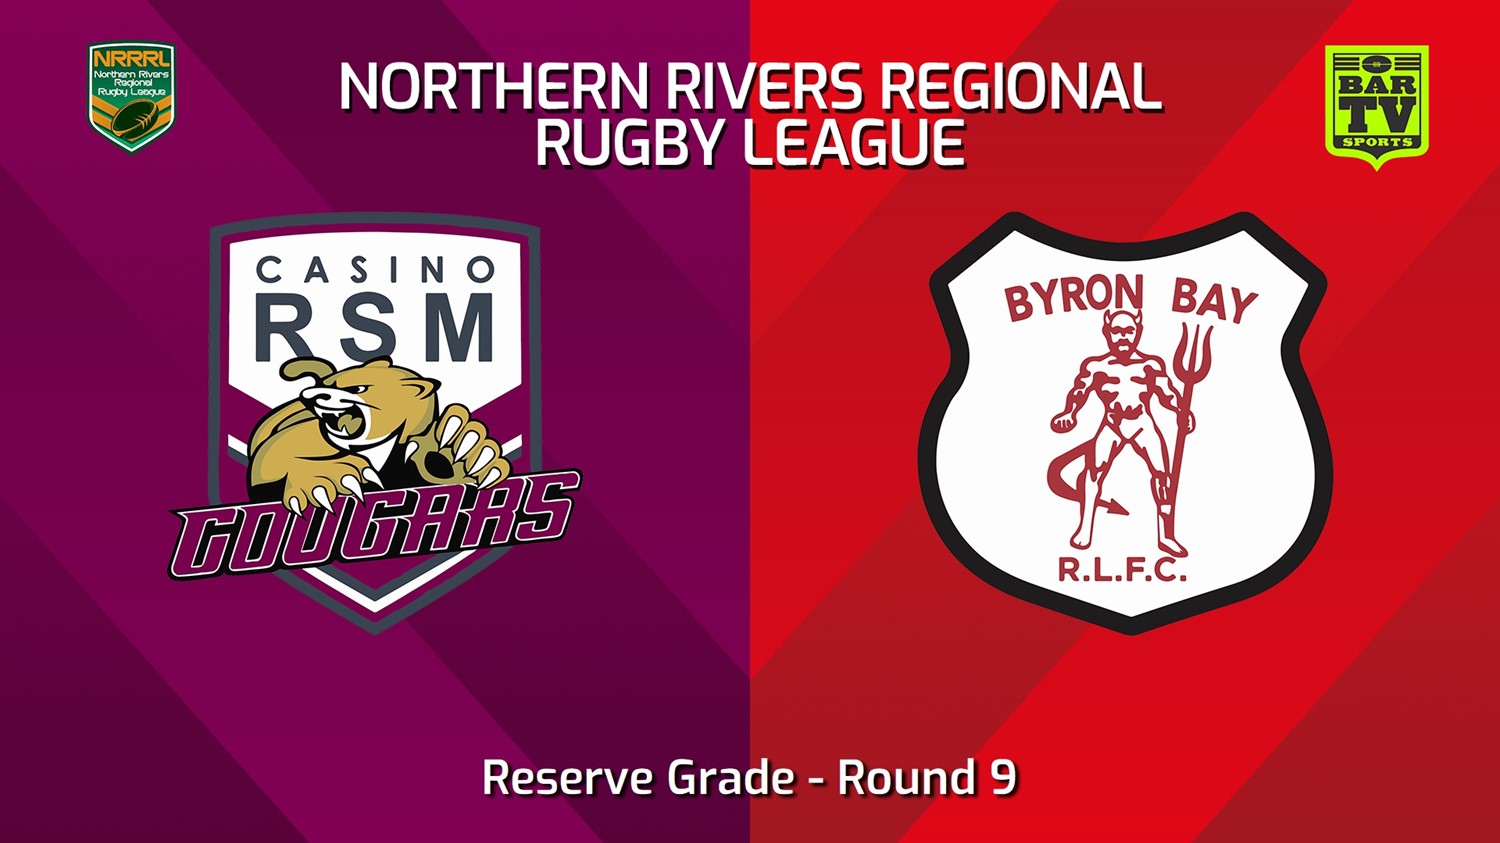 240602-video-Northern Rivers Round 9 - Reserve Grade - Casino RSM Cougars v Byron Bay Red Devils Slate Image